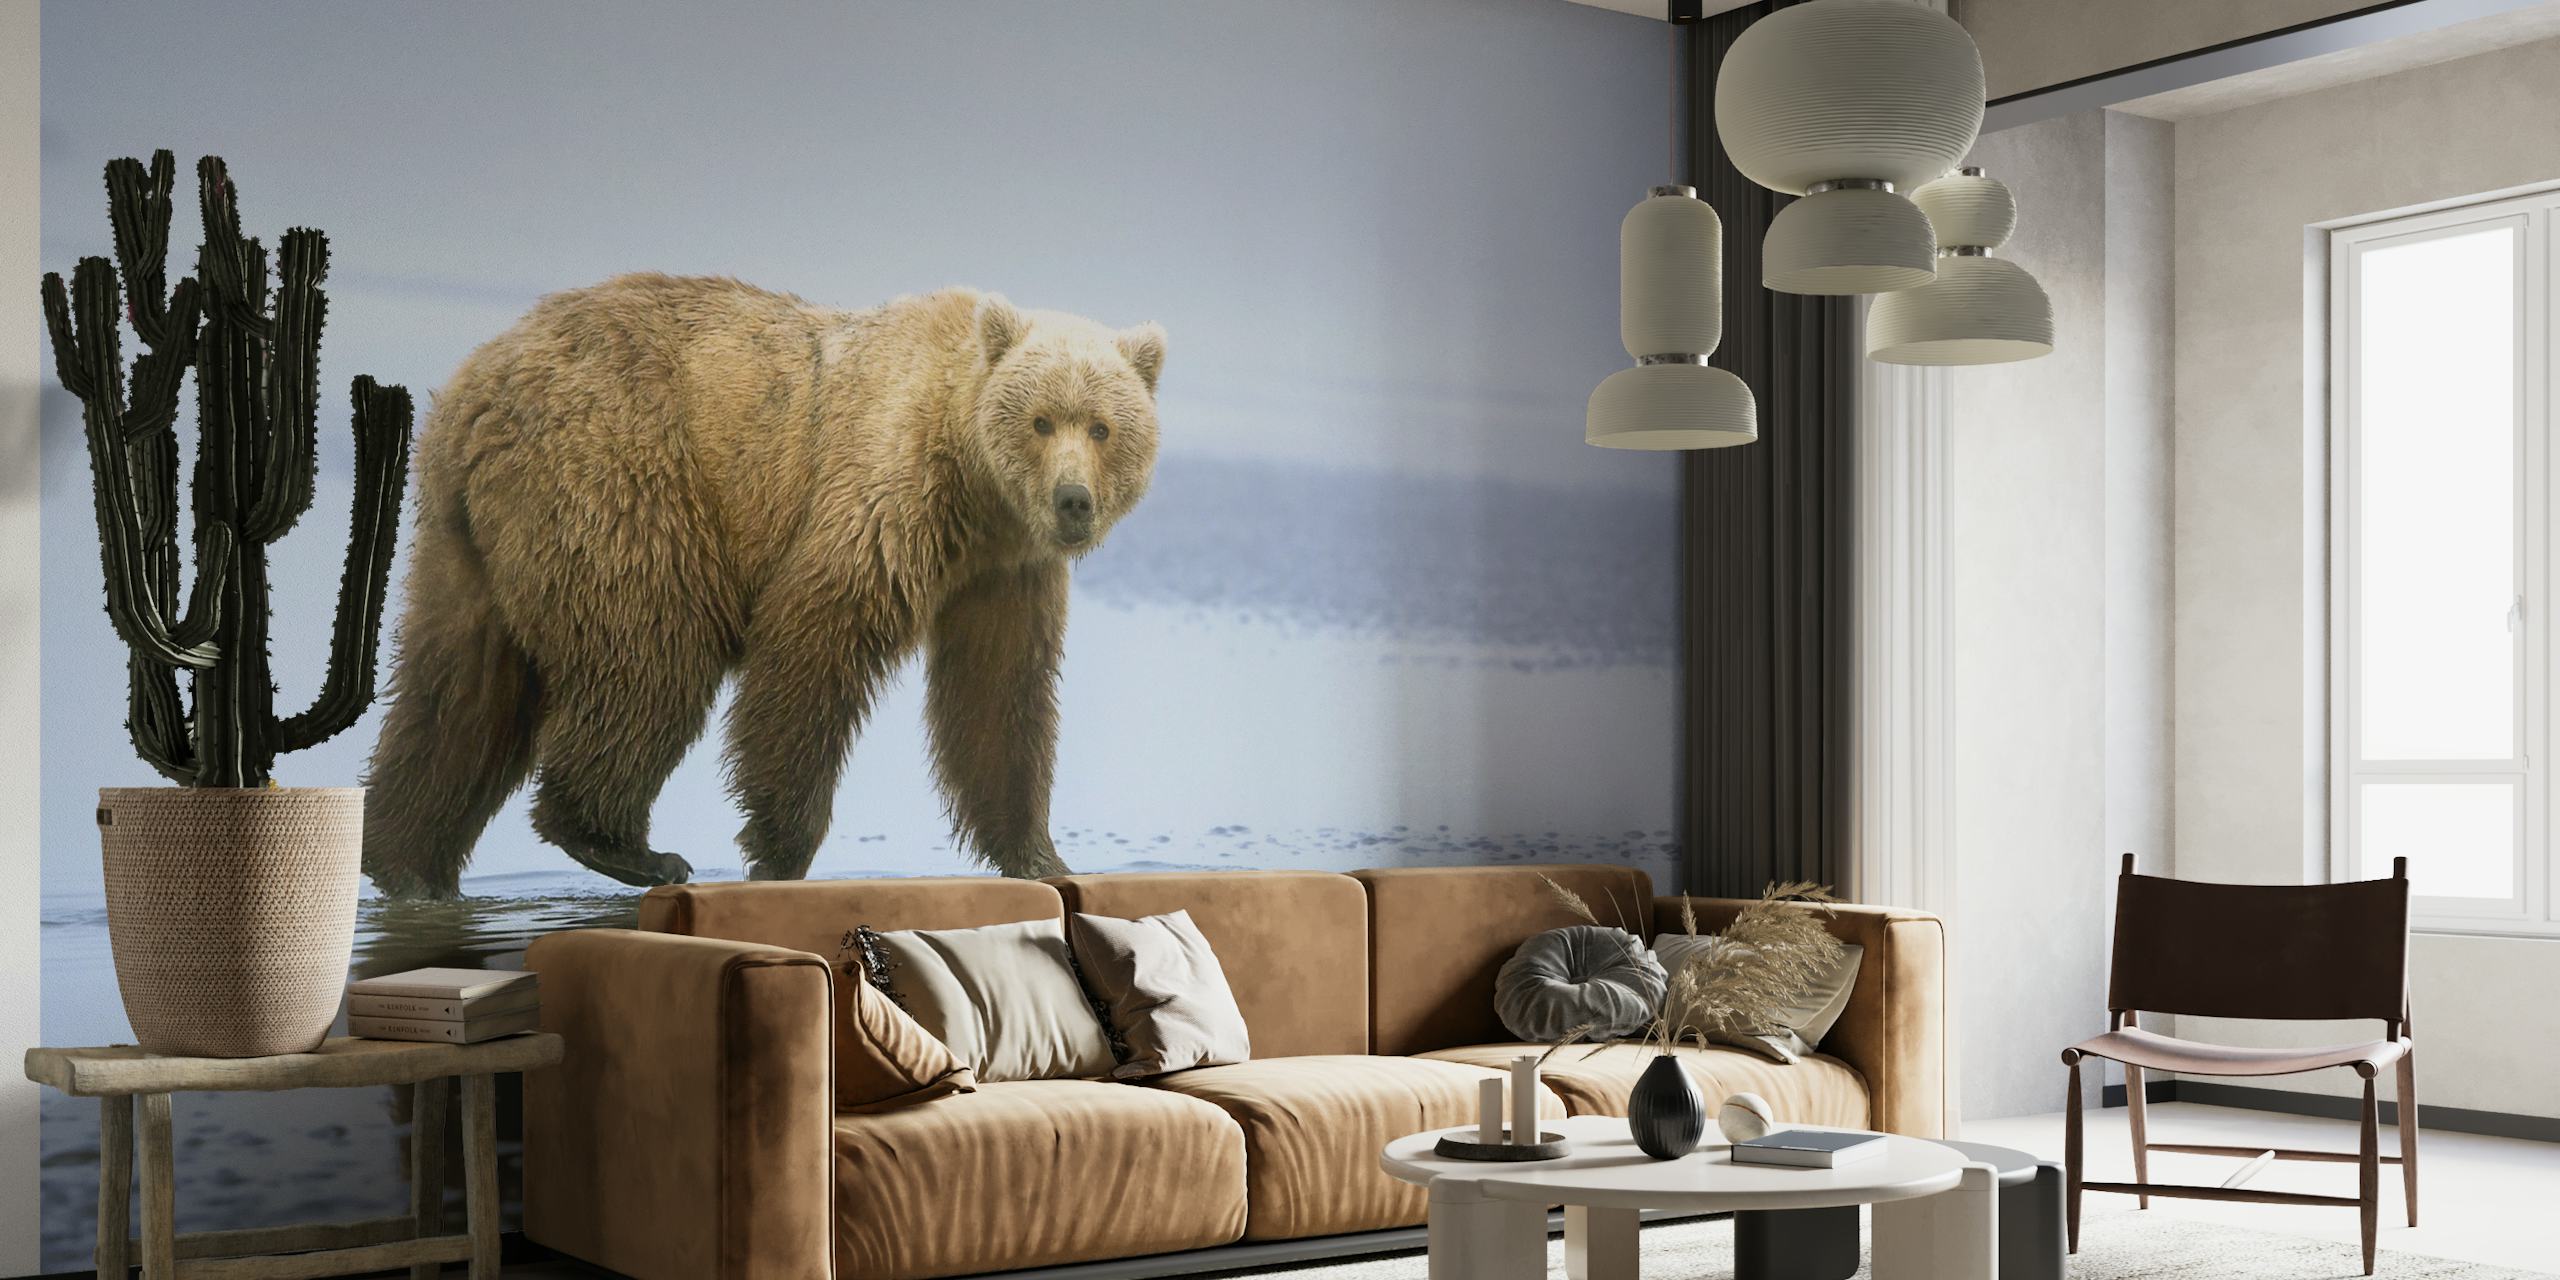 The Bear Walk wallpaper